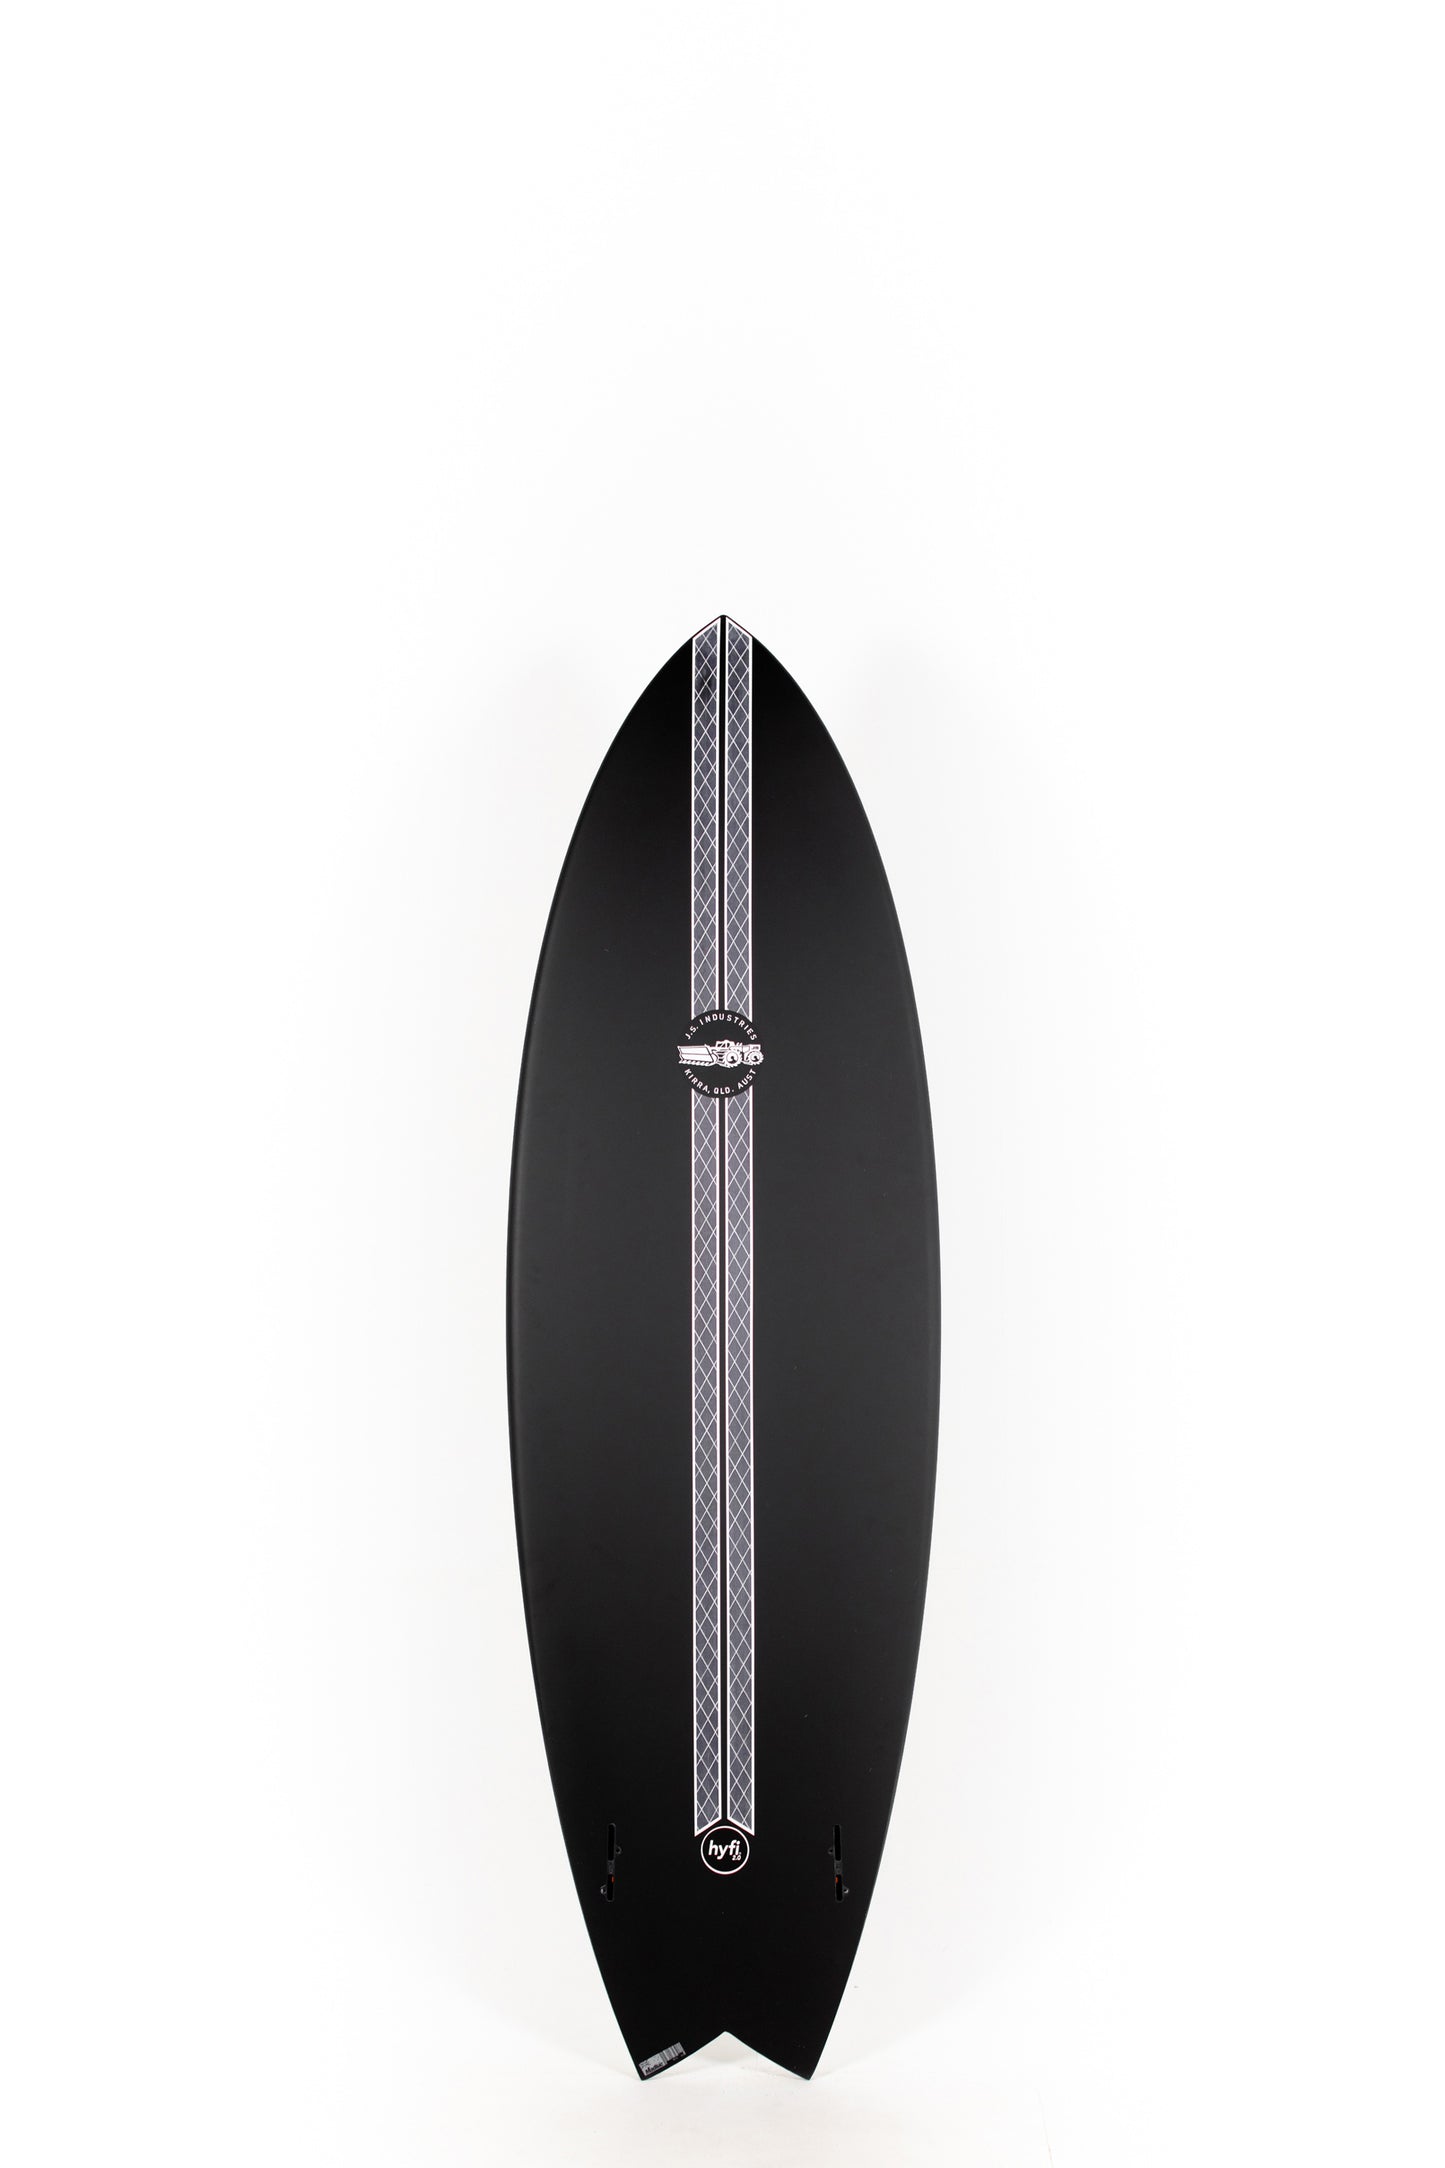 Pukas Surf Shop - JS Surfboards - BLACK BARON HYFI - 6'4" x 22 x 3 x 46,2L - BLACKBHYFI604